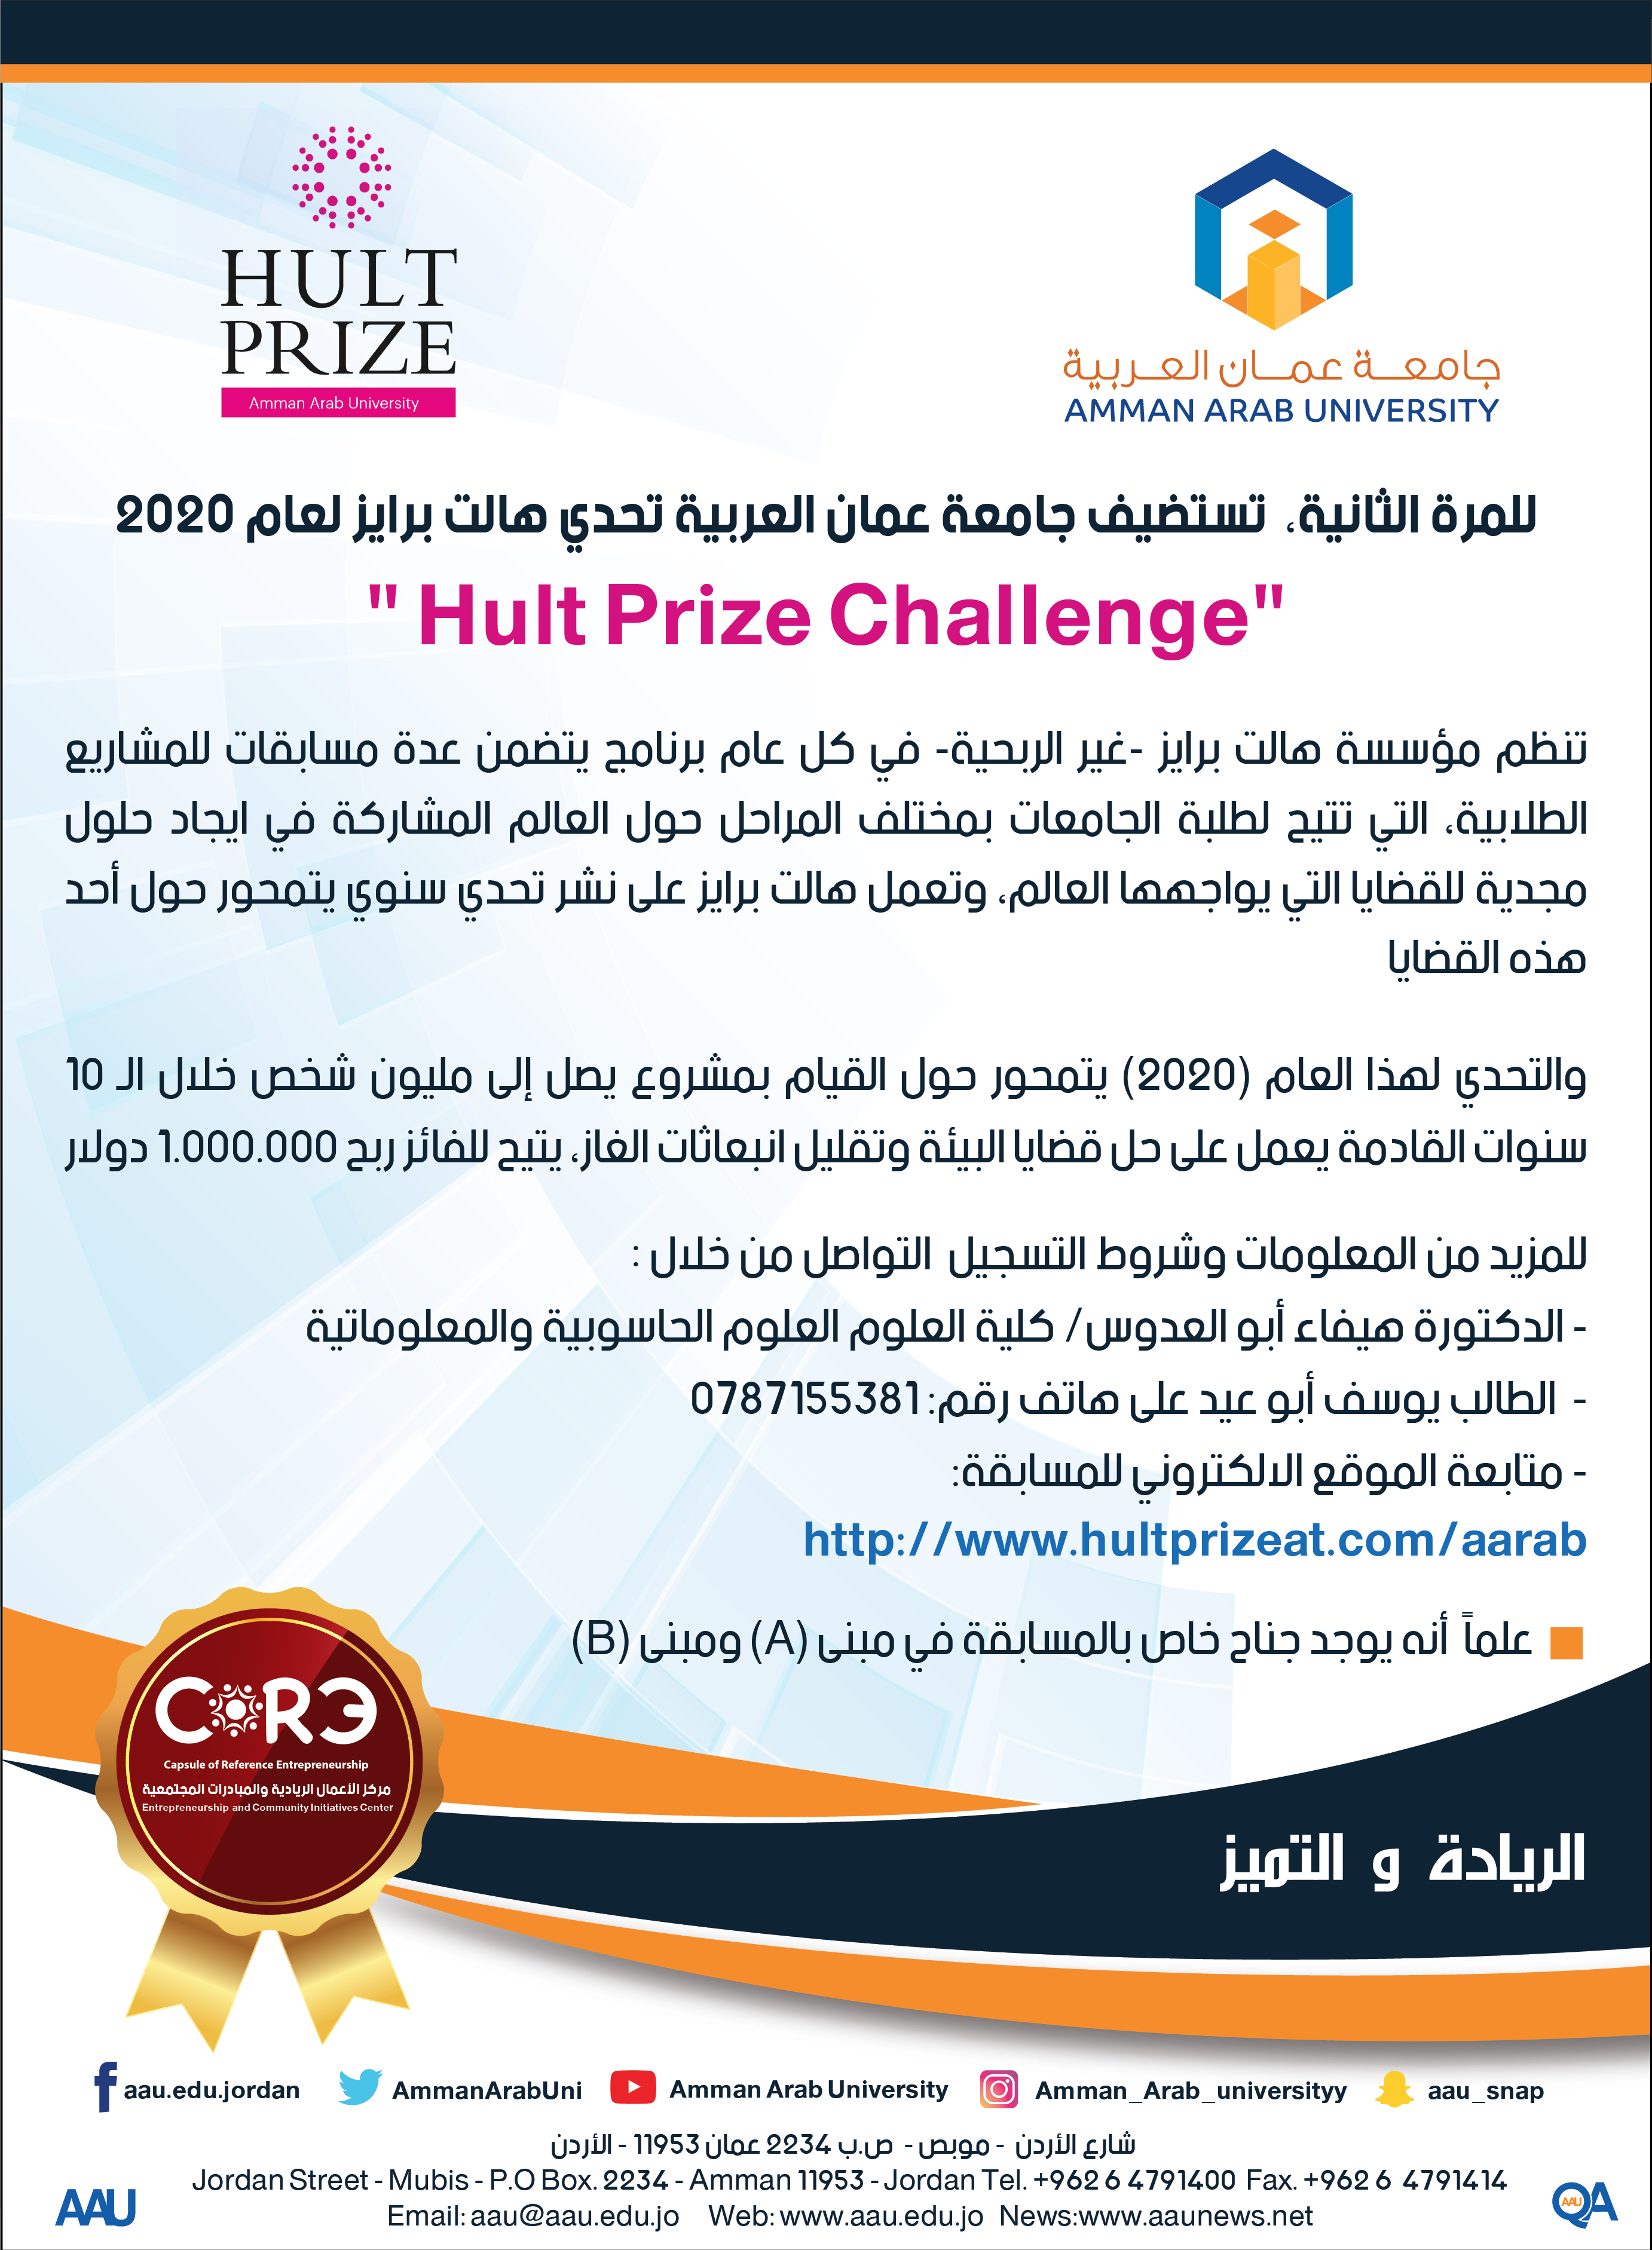 Hult Prize